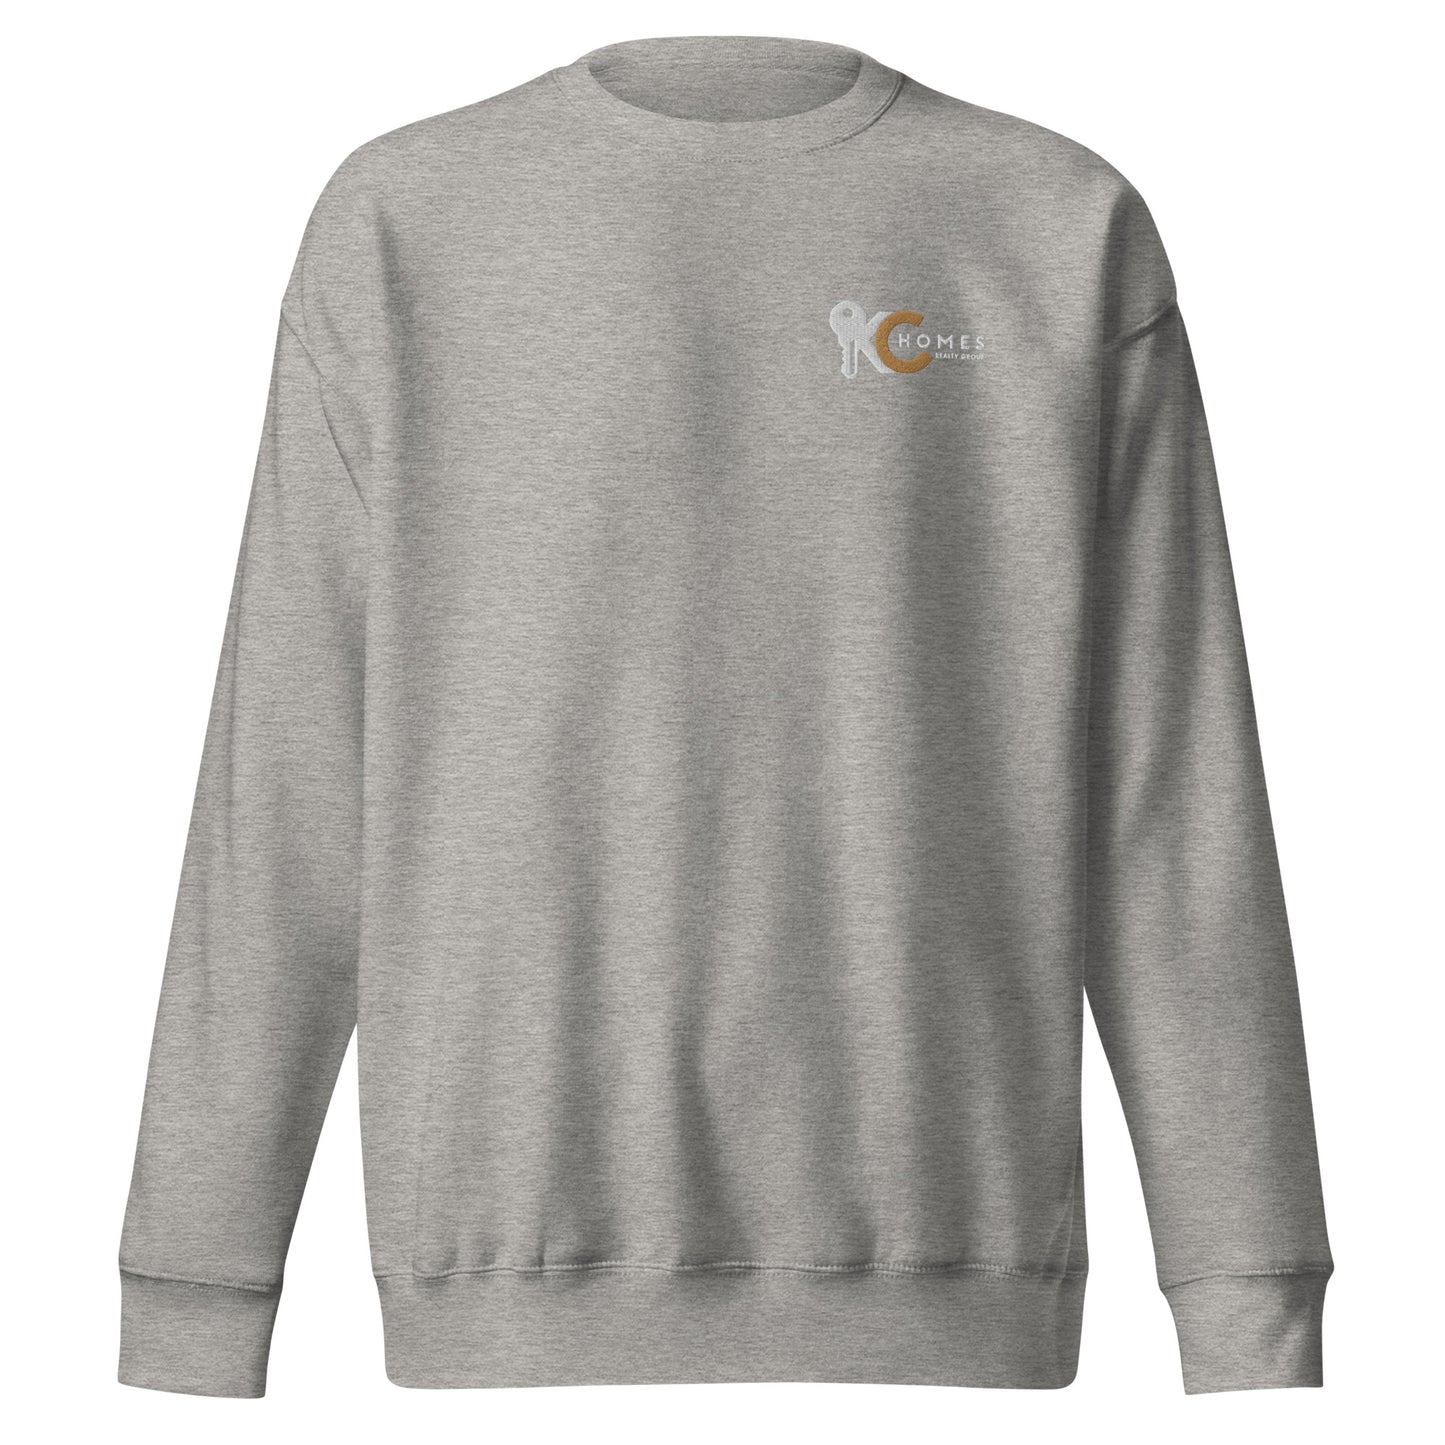 KC Homes Unisex Premium Sweatshirt